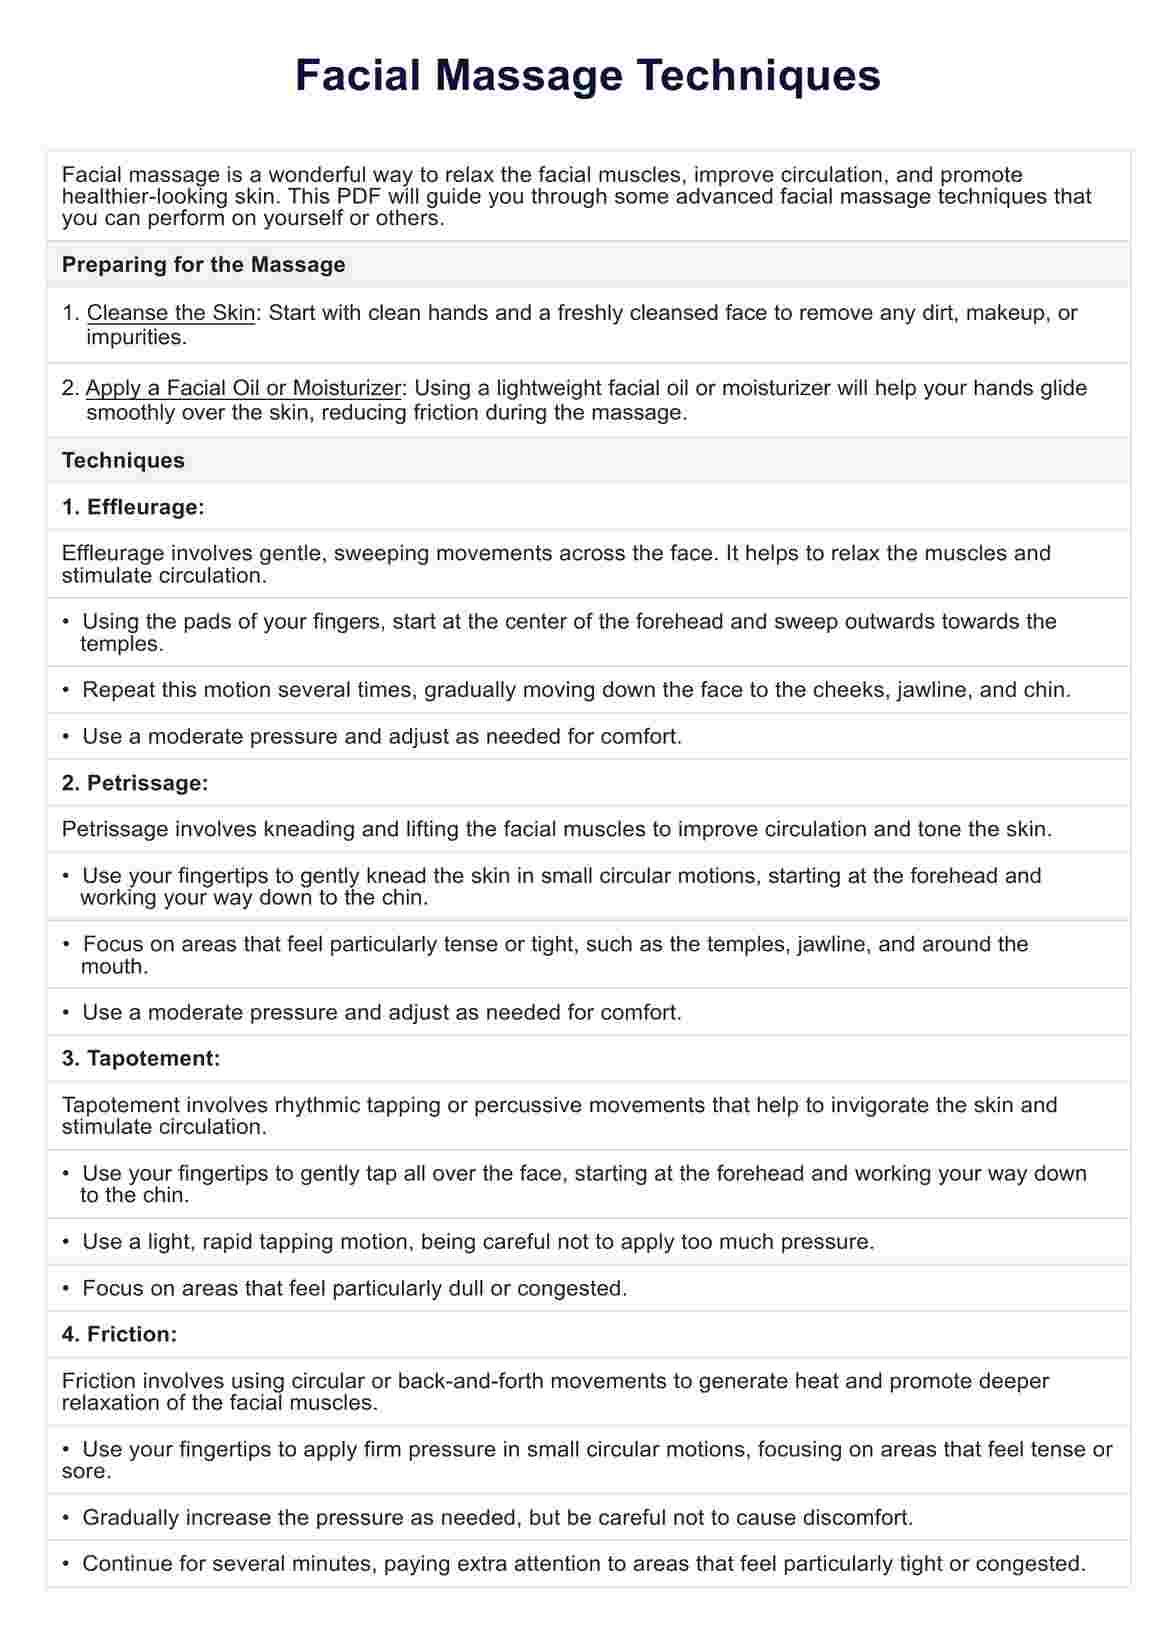 Facial Massage Techniques PDF PDF Example